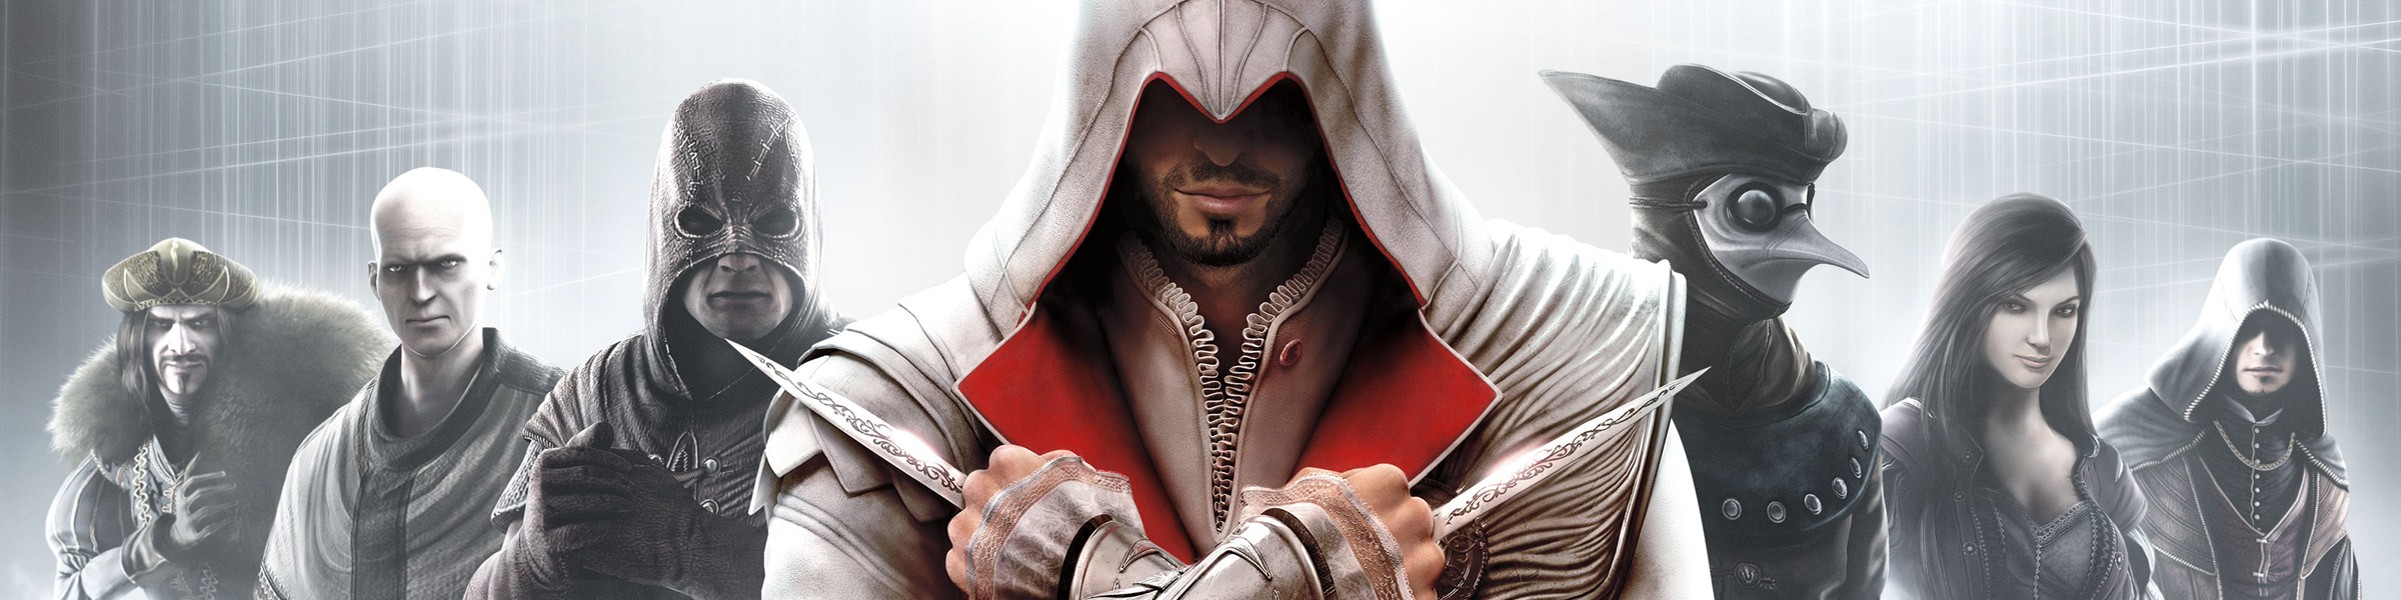 Brotherhood ii. Ассасин братство крови. Assassin's Creed: Brotherhood. Assassin's Creed Brotherhood. Deluxe Edition. Assassin's Creed 2 братство крови.